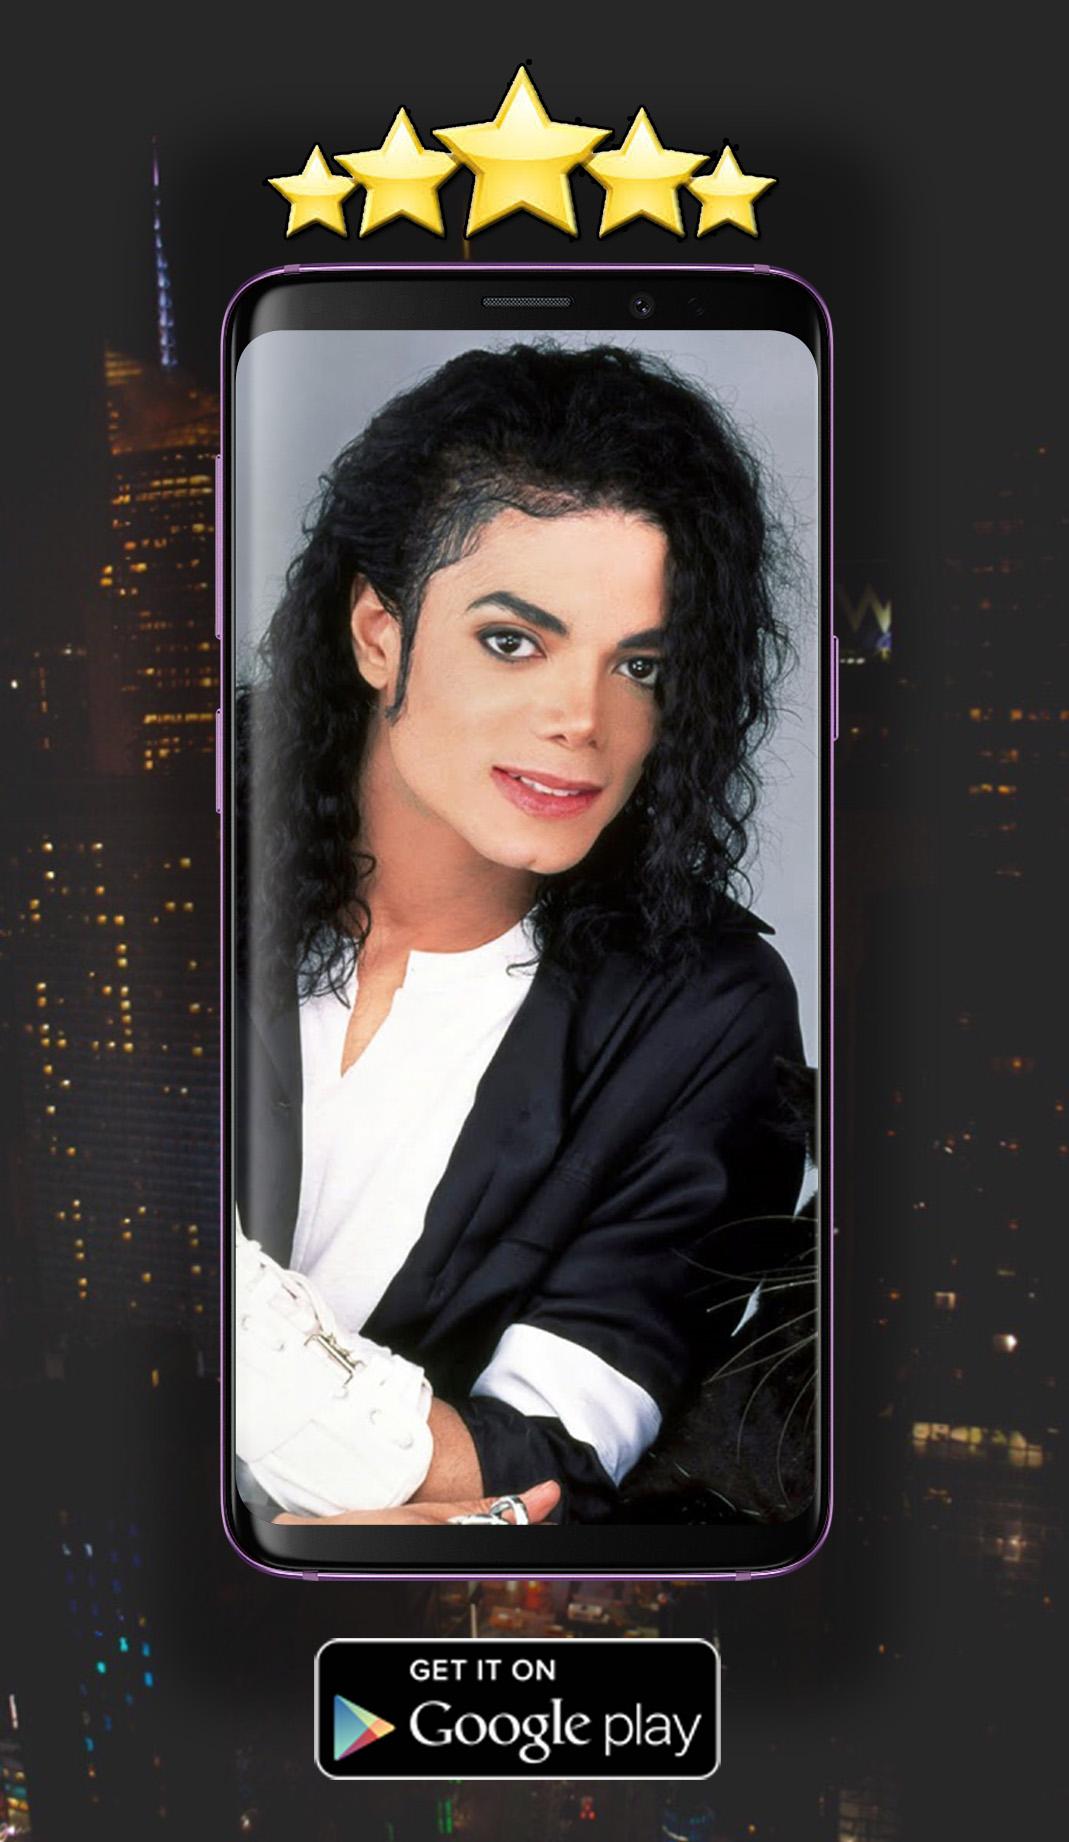 Cool Michael Jackson Wallpapers